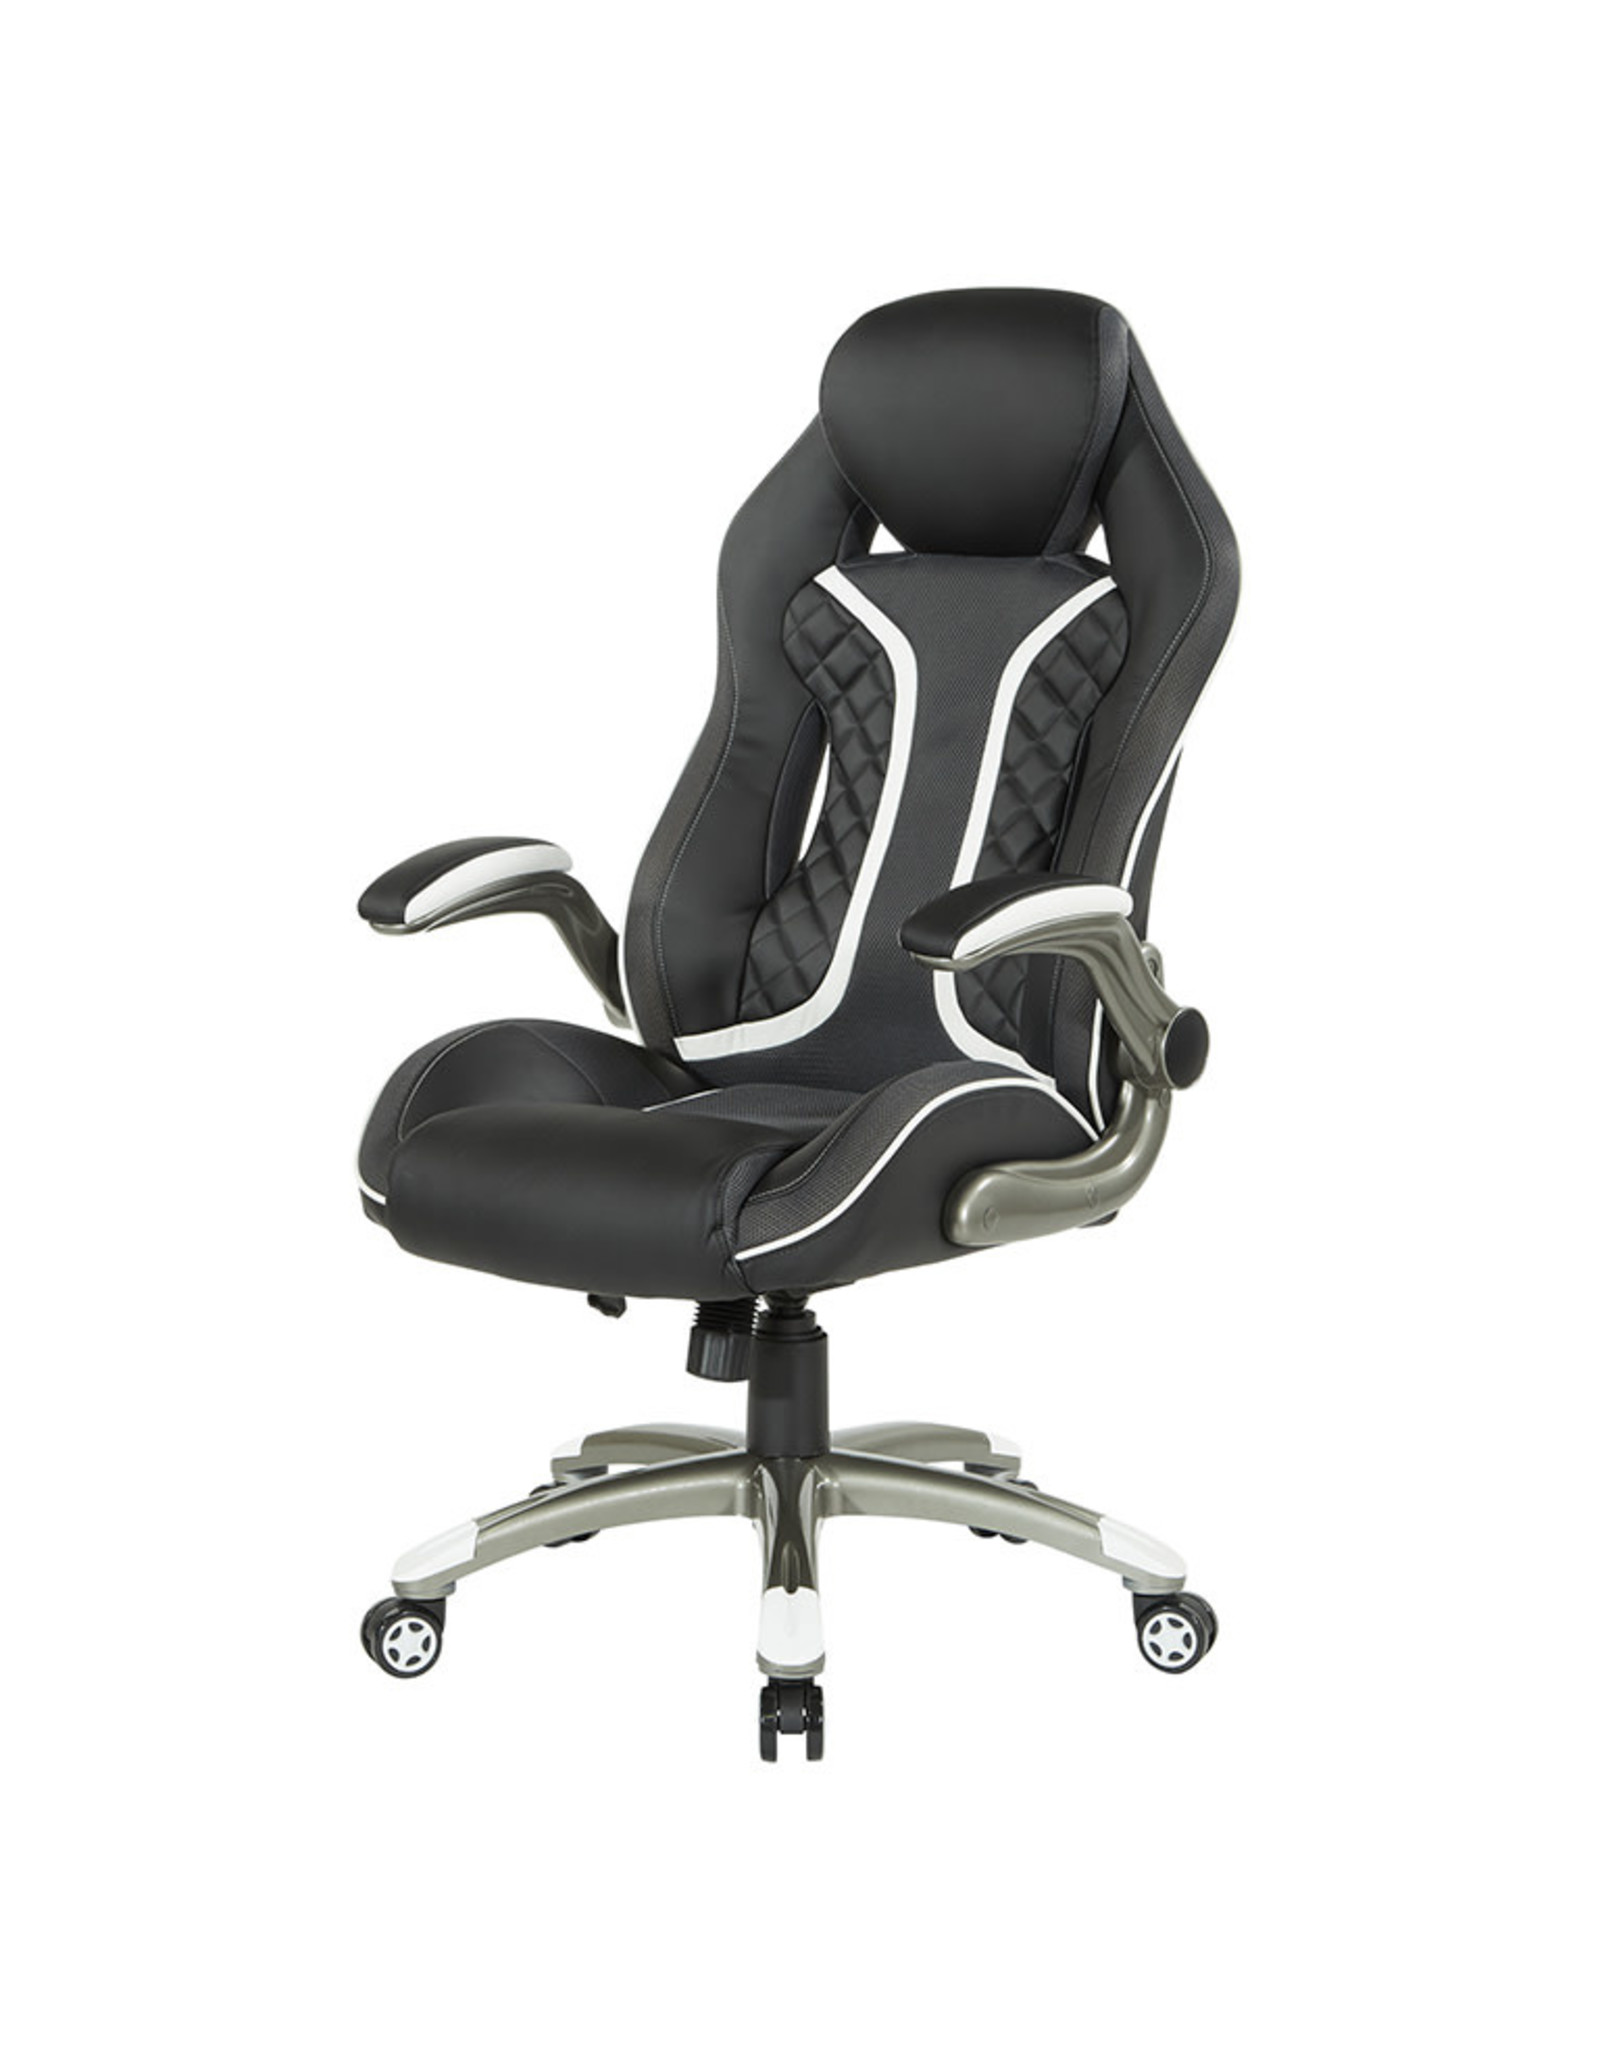 Xplorer 51 Gaming Chair